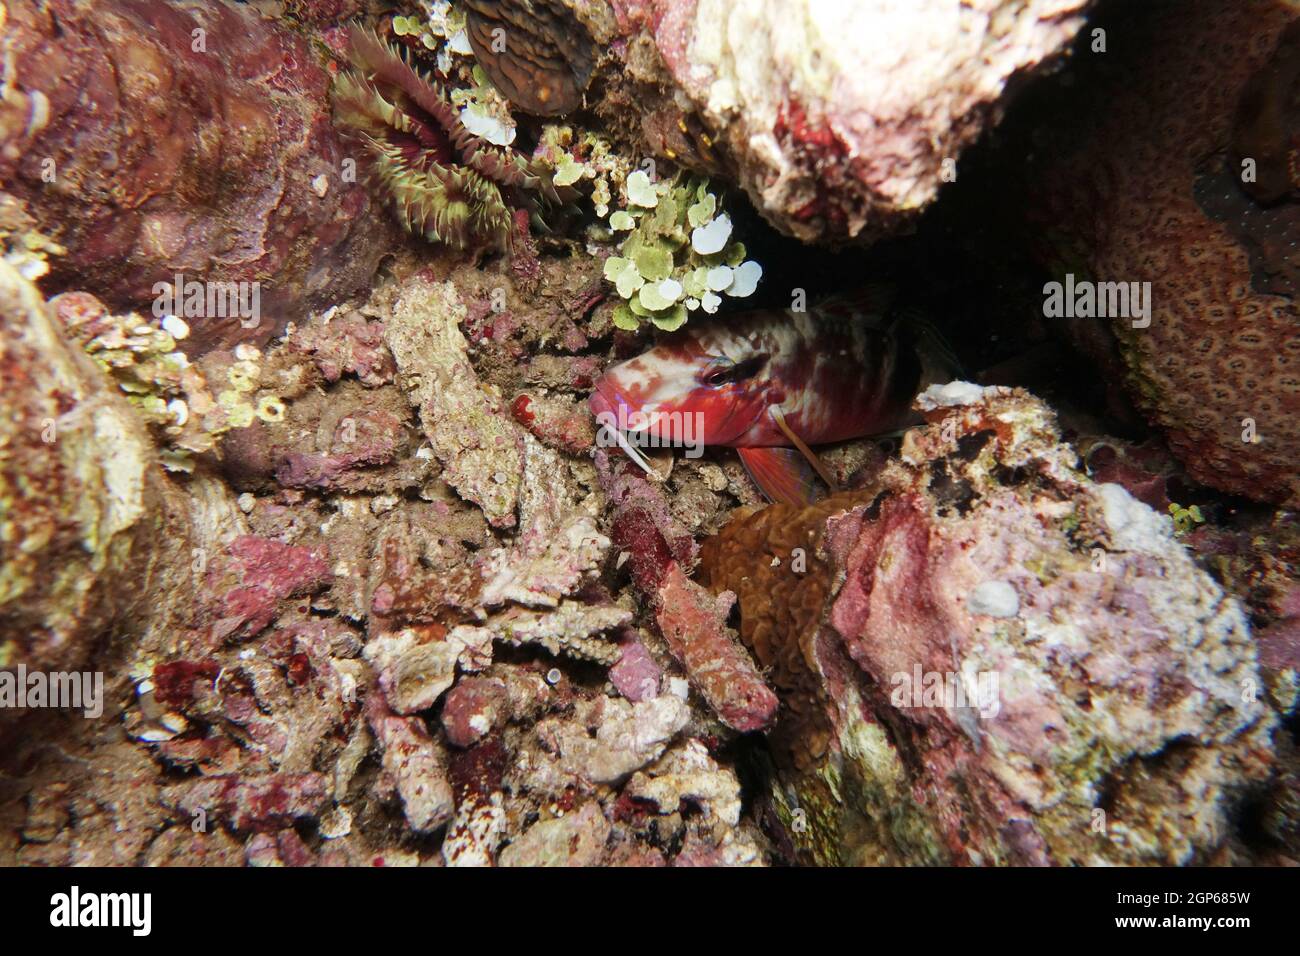 Vielstreifen-Meerbarbe - Parupeneus multifasciatus, Nord-Molukken, Halmahera, Indonesien, Lata Lata Stock Photo